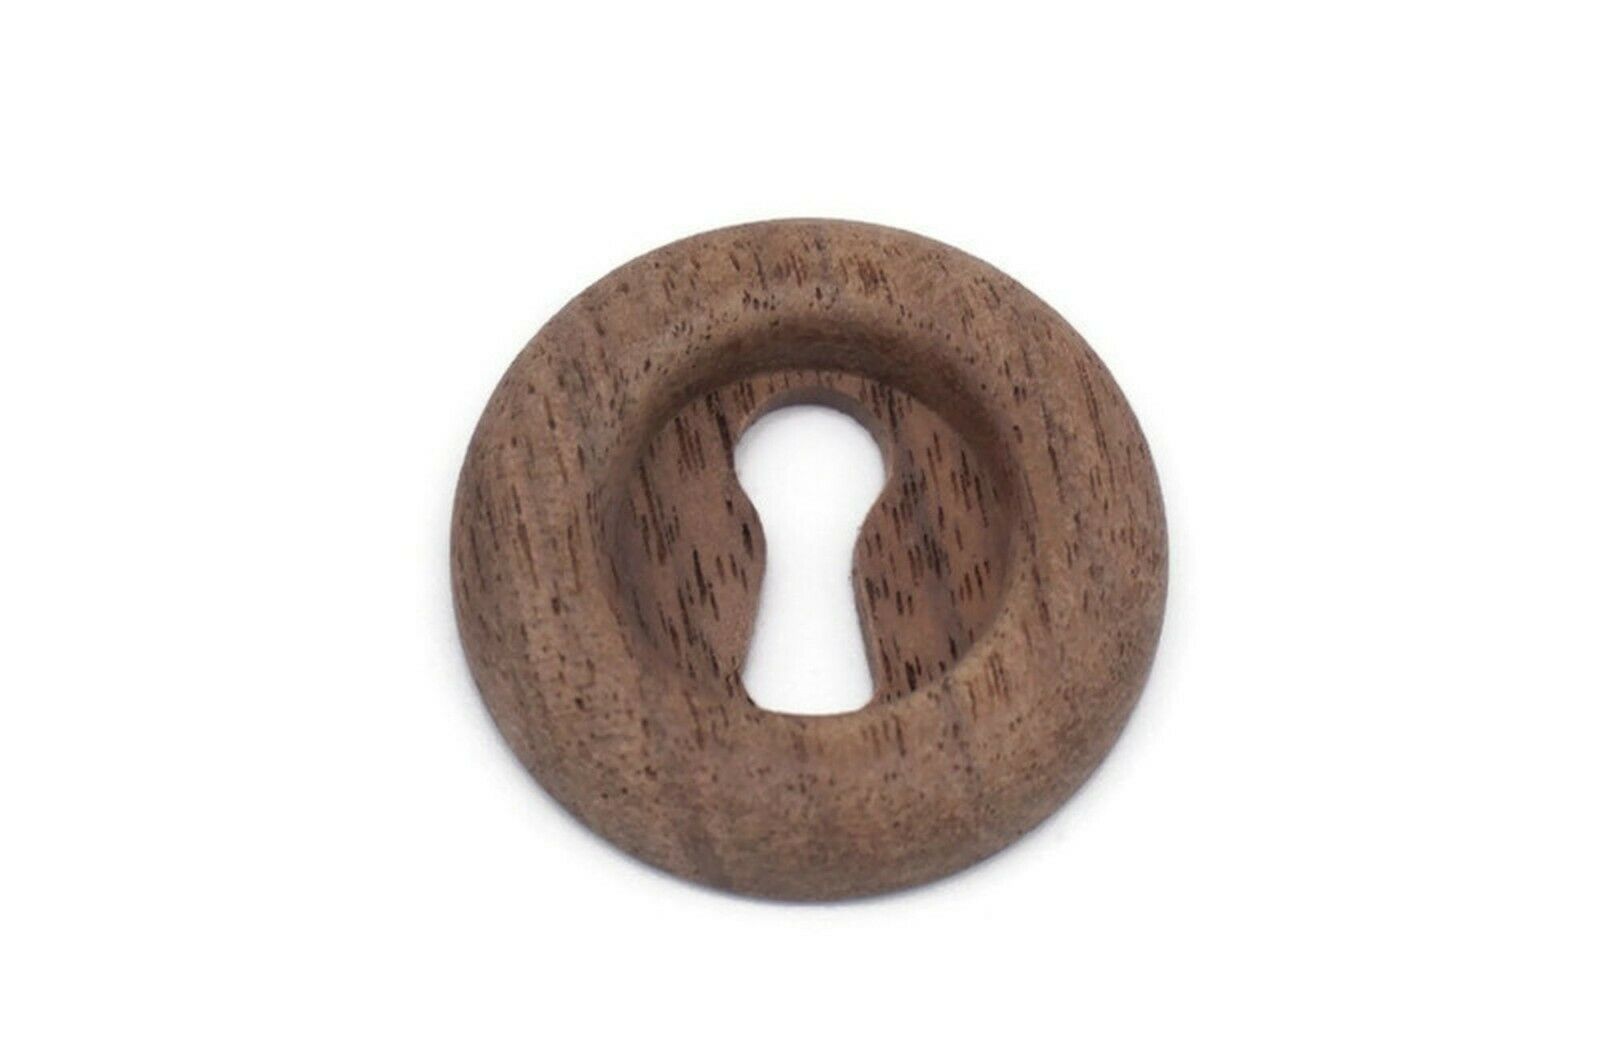 Keyhole Cover Plates Wood Escutcheon Furniture Lock Cover Walnut Antique Locks